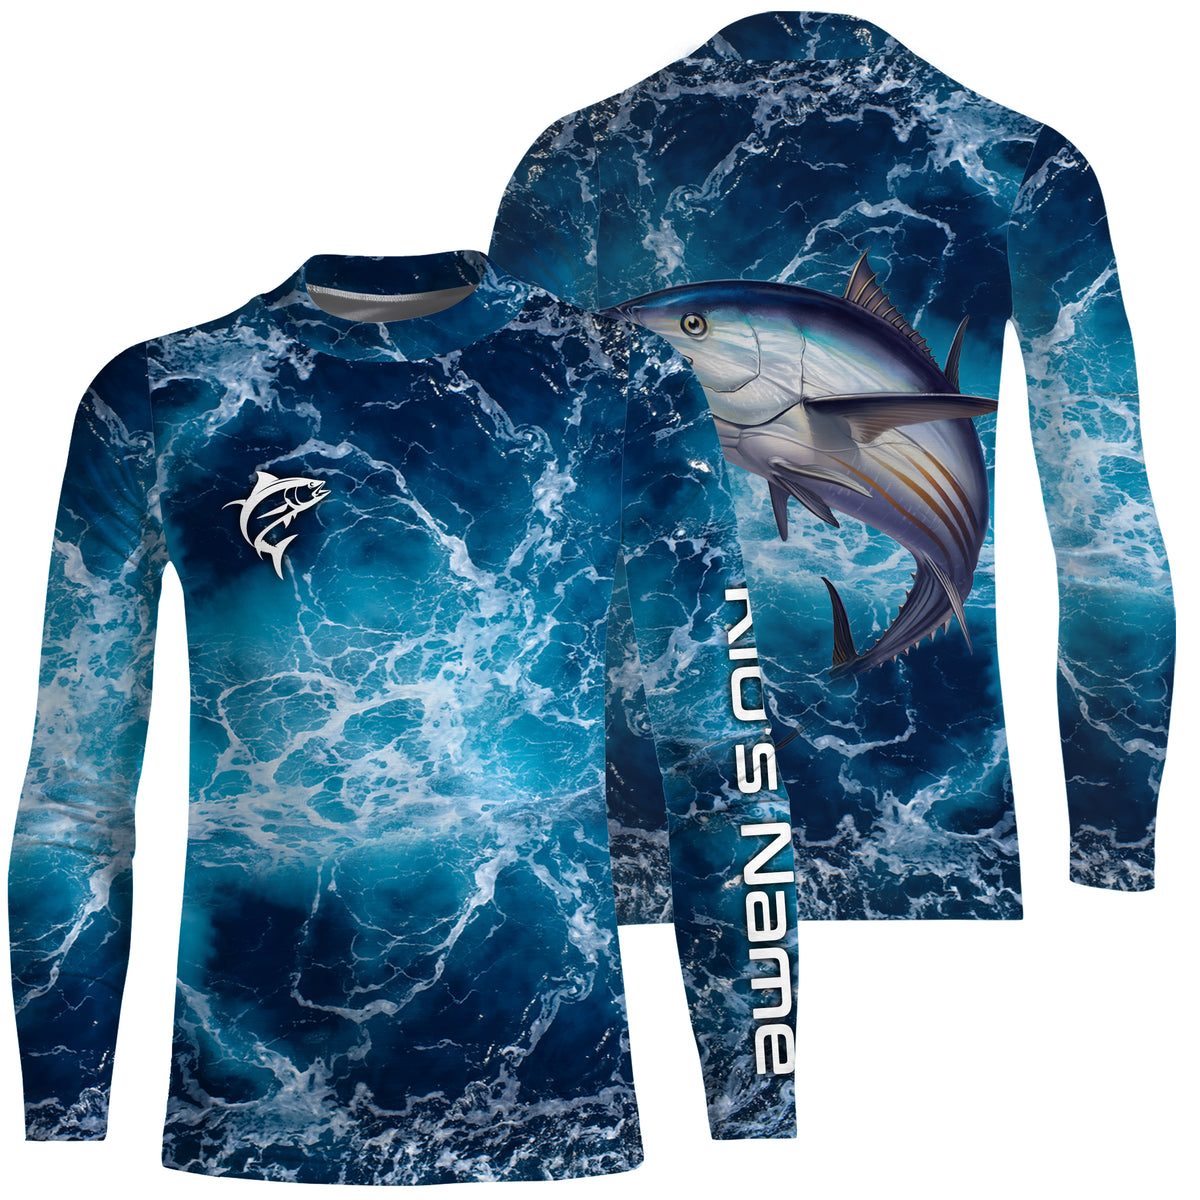  ChipteeAmz Tuna Fishing Shirts Blue Ocean Camouflage  Performance Fishing Shirt, Sun Protection, Gift for Fisherman TTN39 :  ביגוד, נעליים ותכשיטים